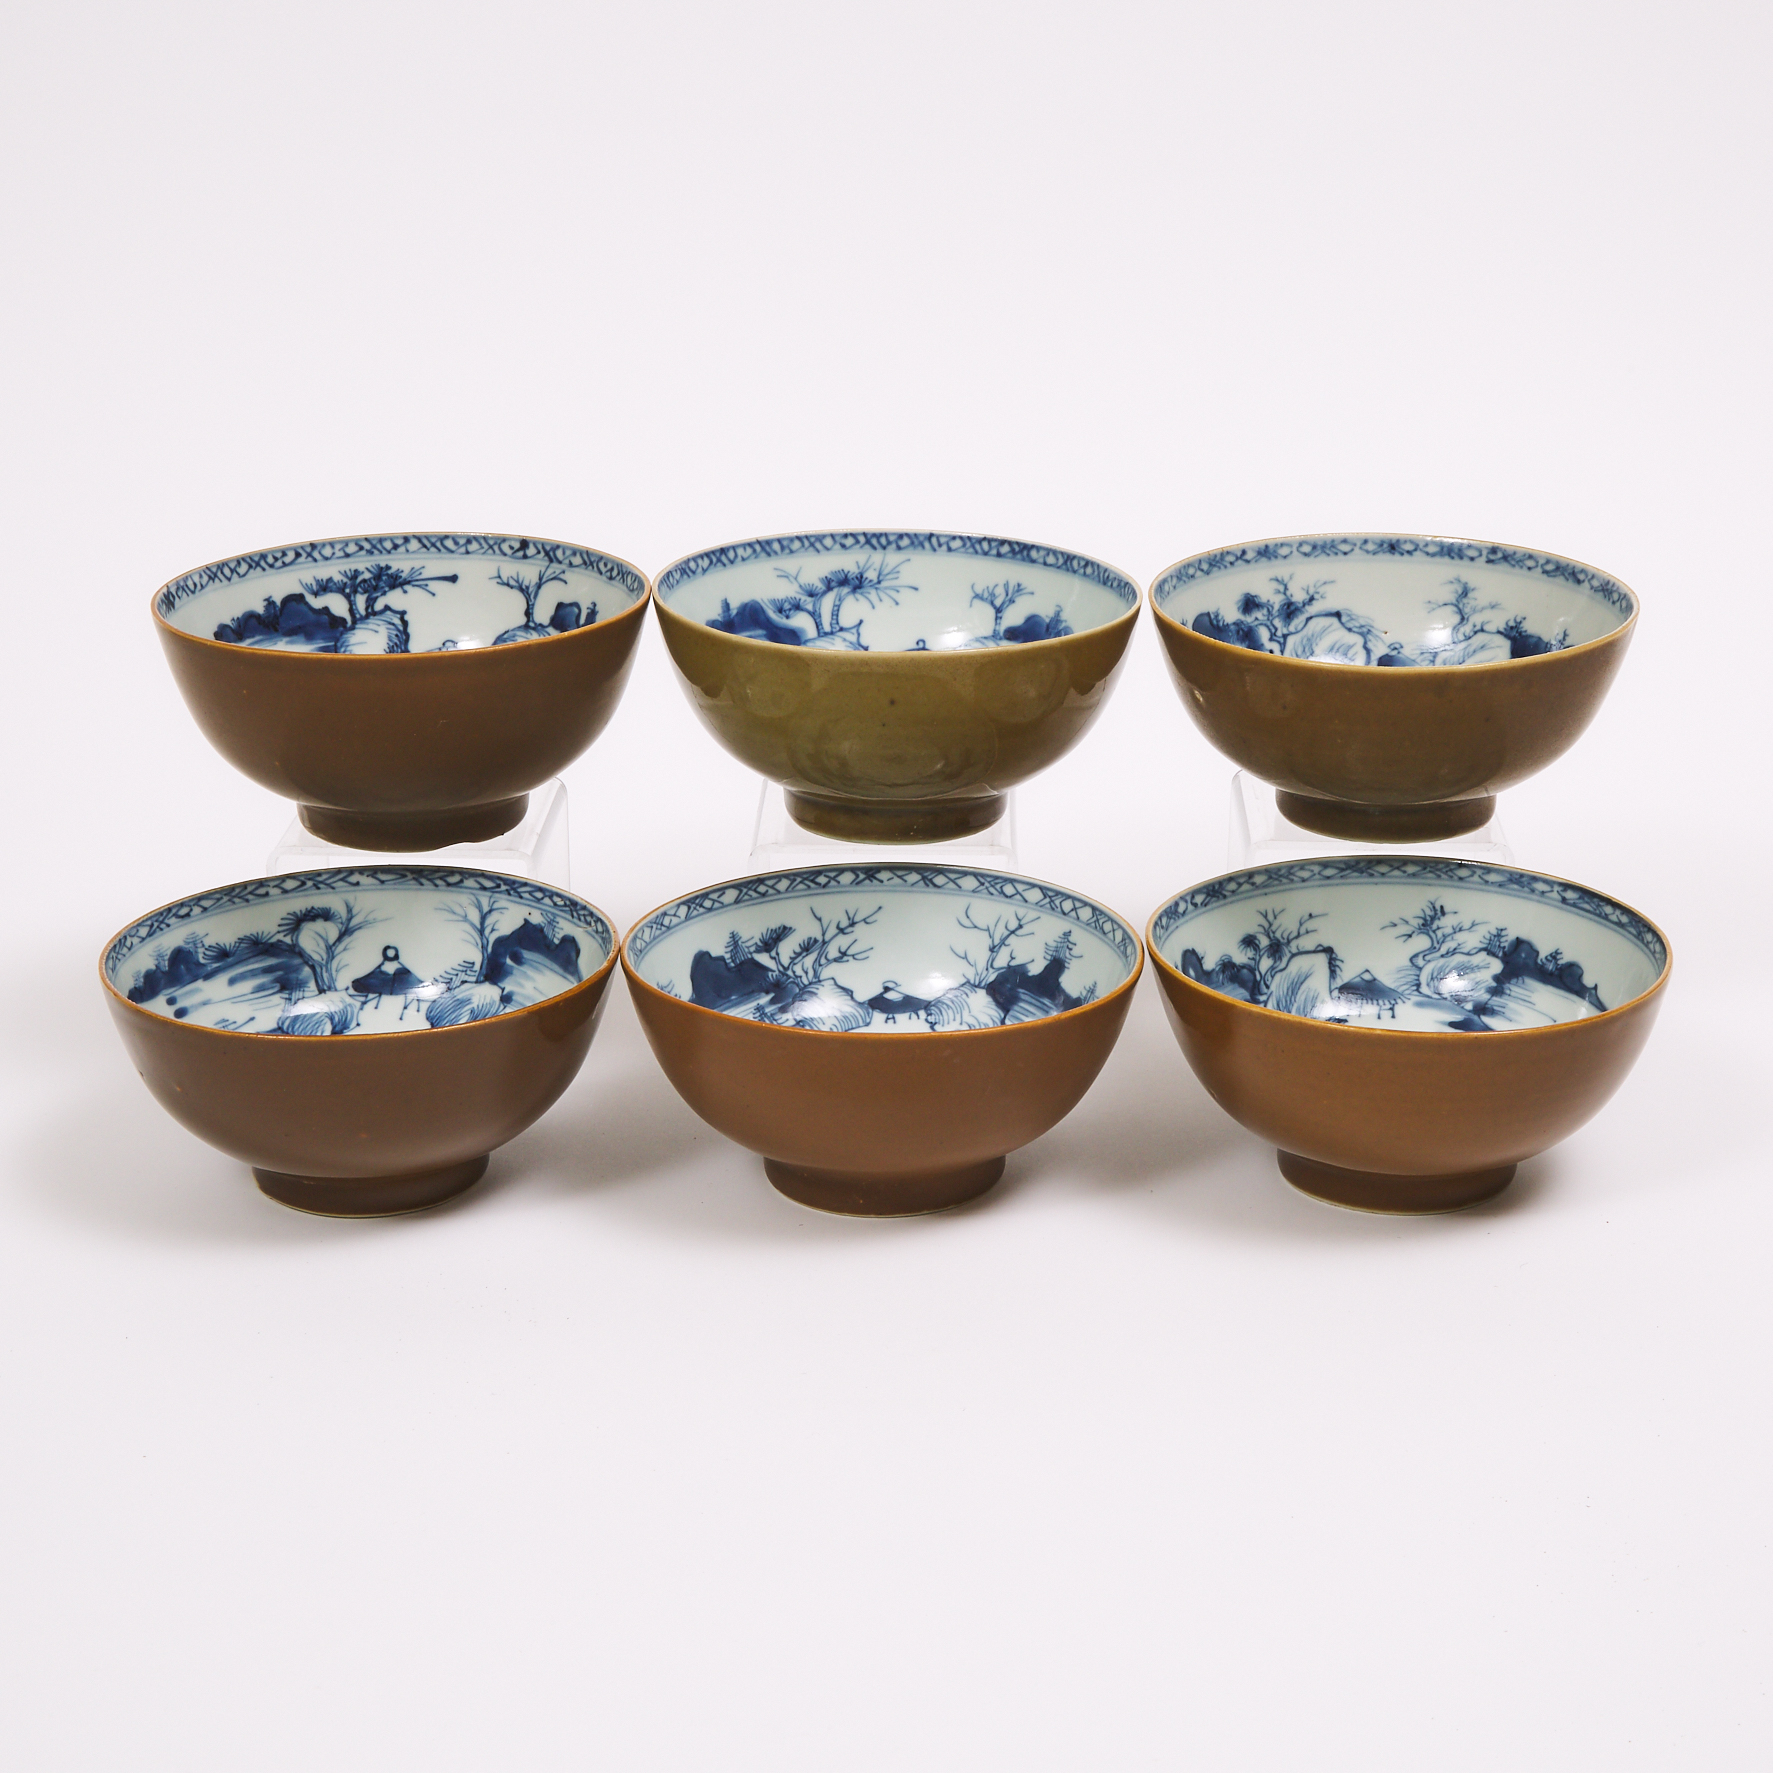 A Set of Six 'Batavian' Landscape Bowls from the Nanking Cargo, Qianlong Period, Circa 1750